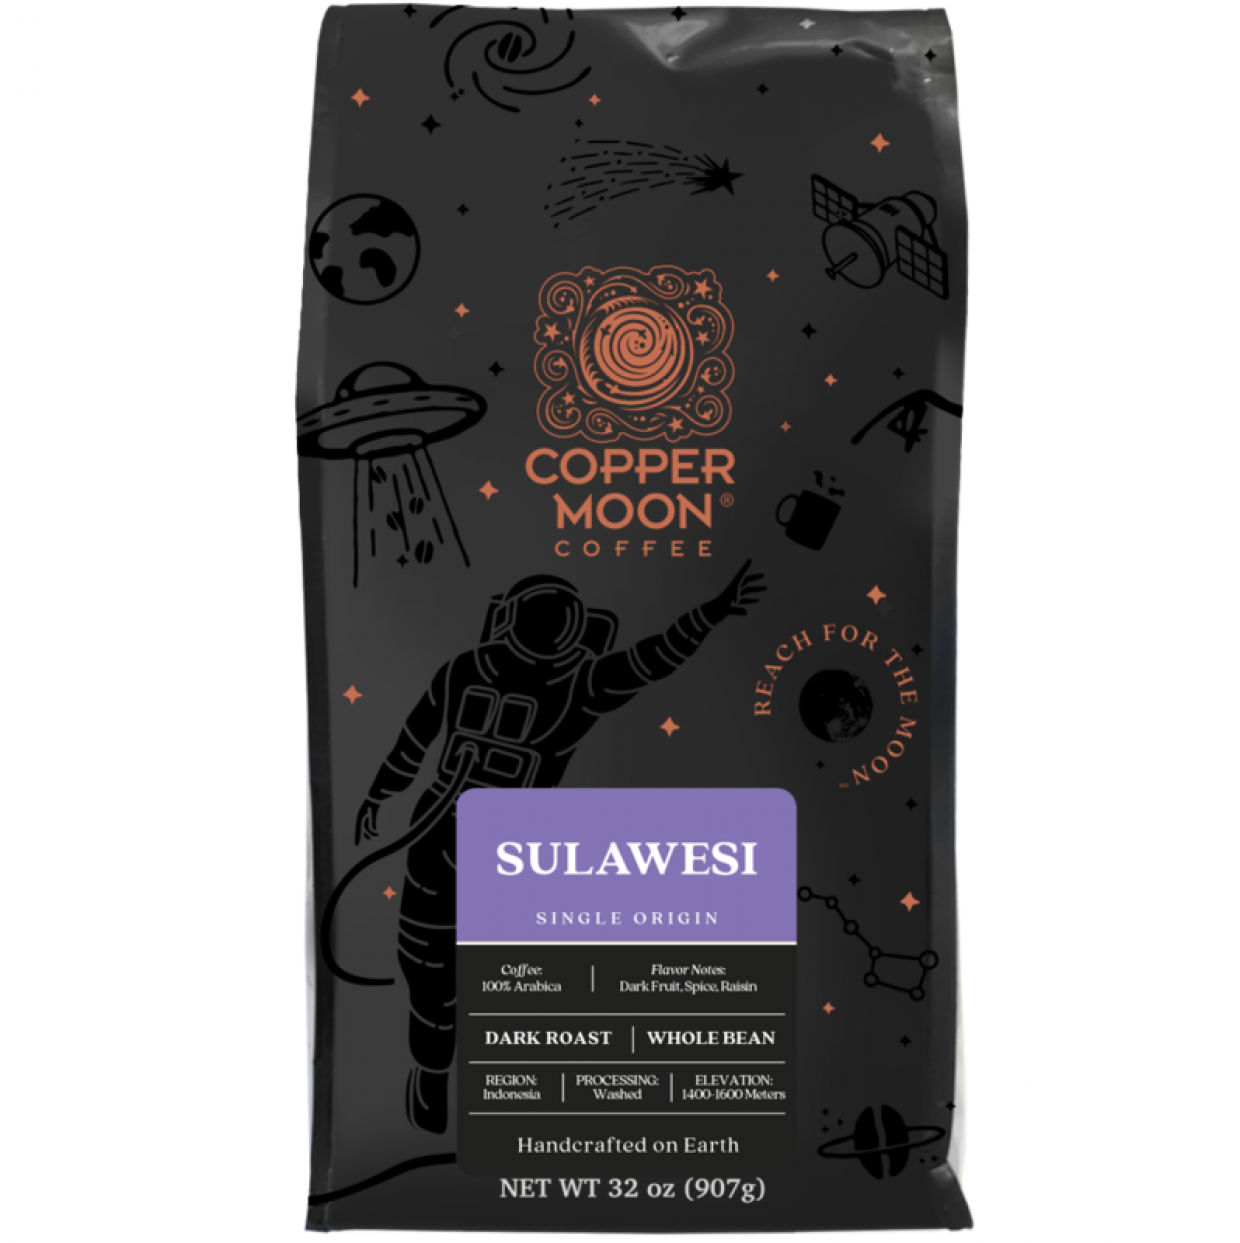 Copper Moon Coffee Sulawesi 2 lb. Whole Bean